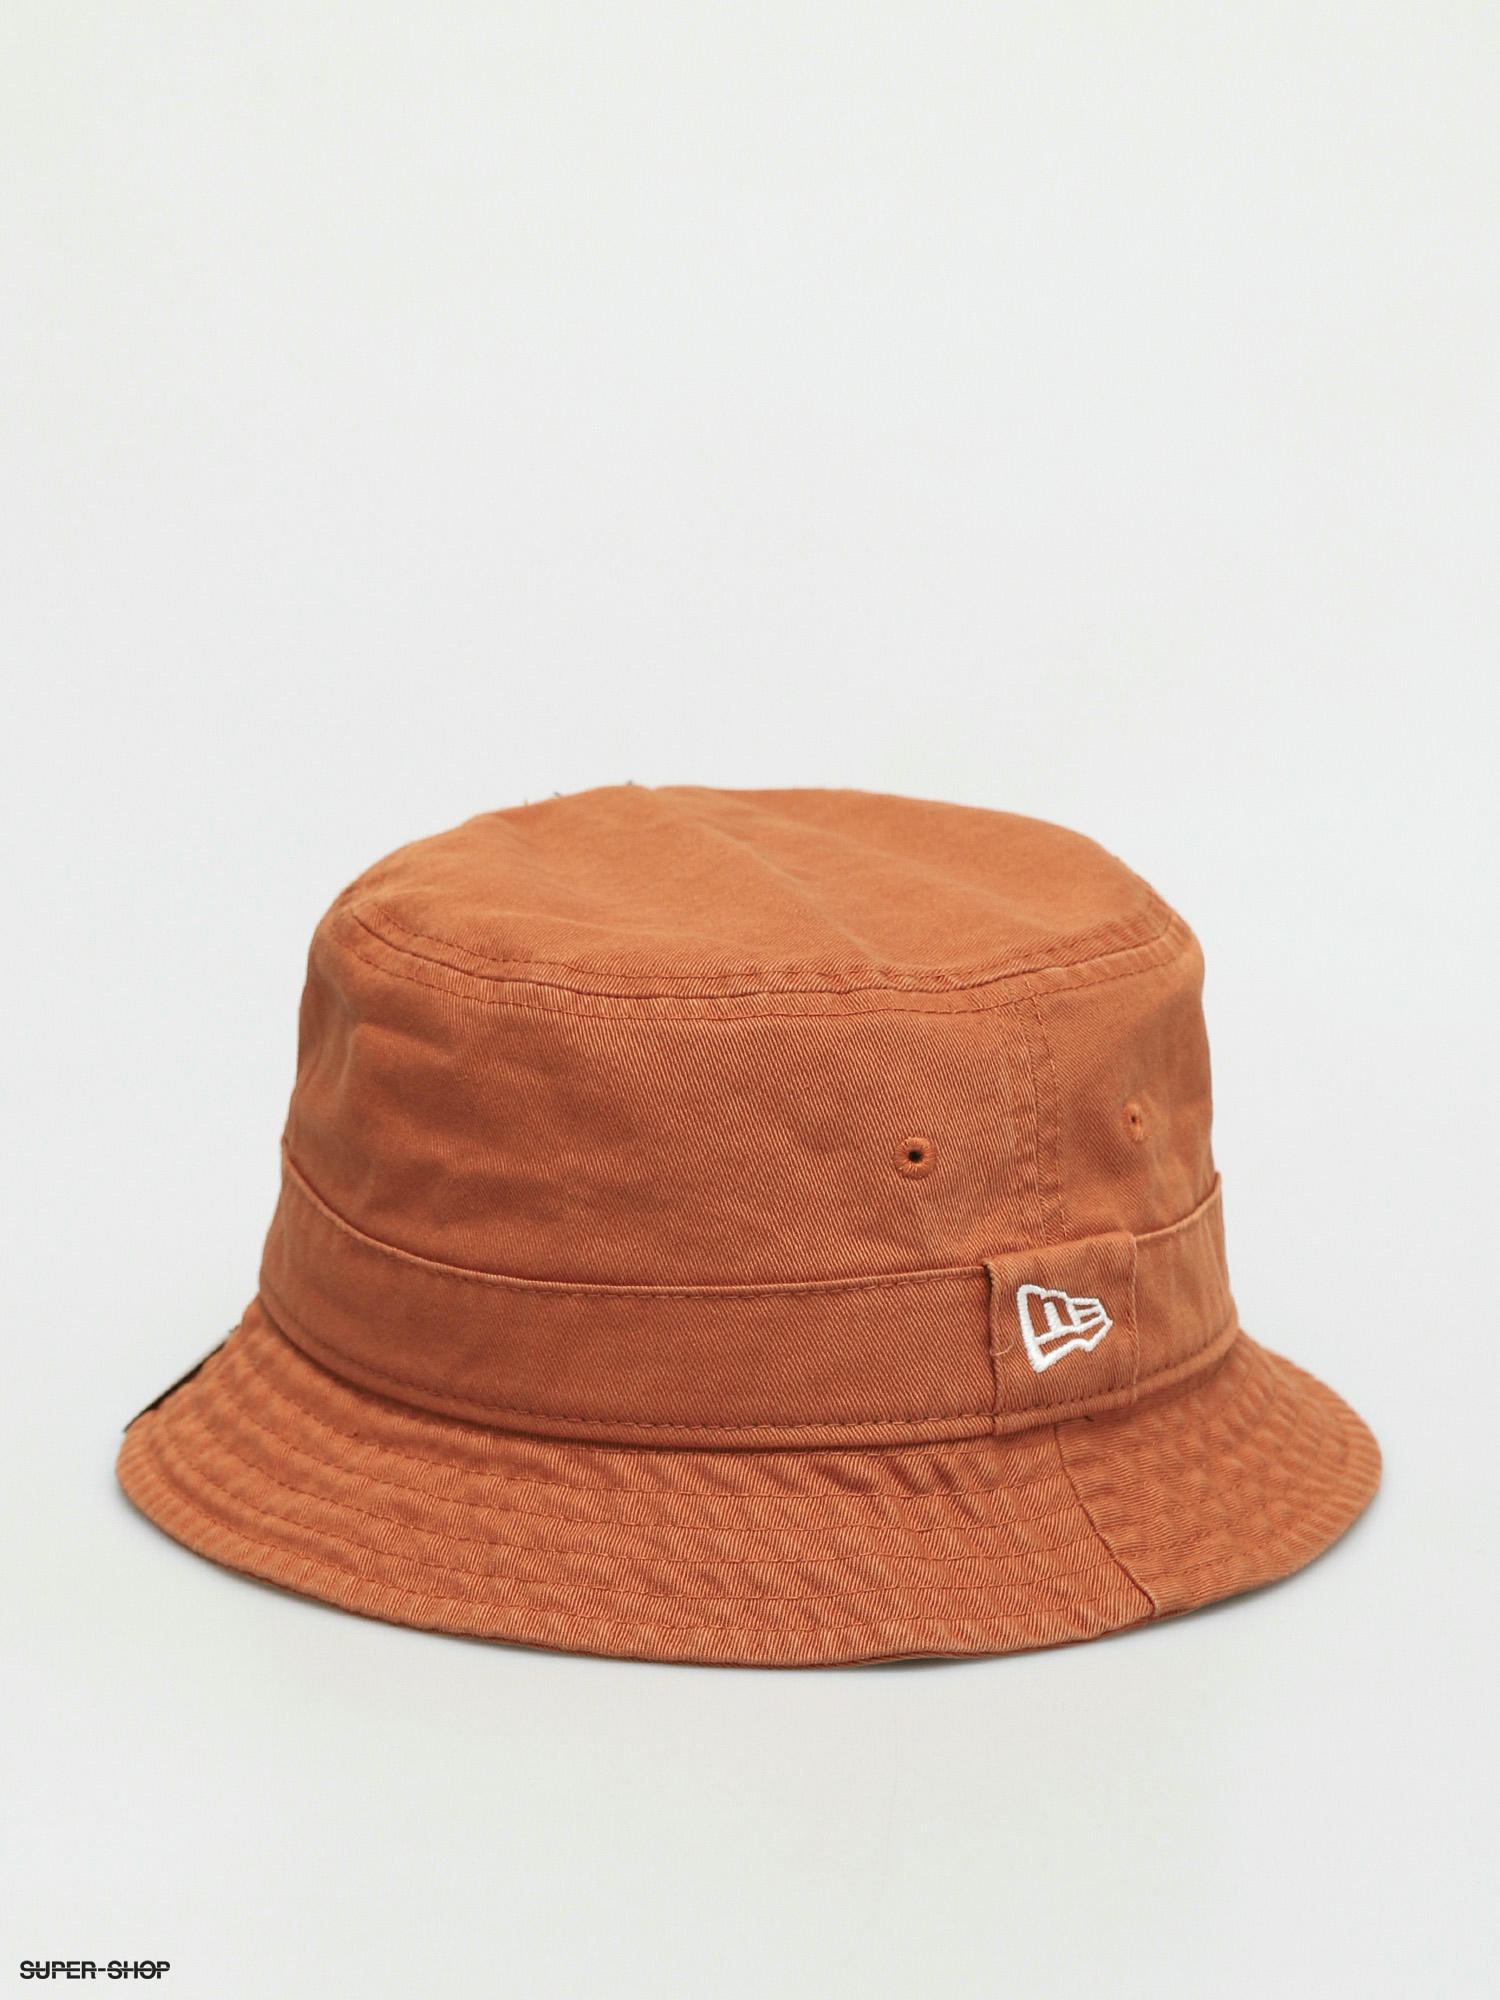 New Era Essential Bucket Hat (med brown)